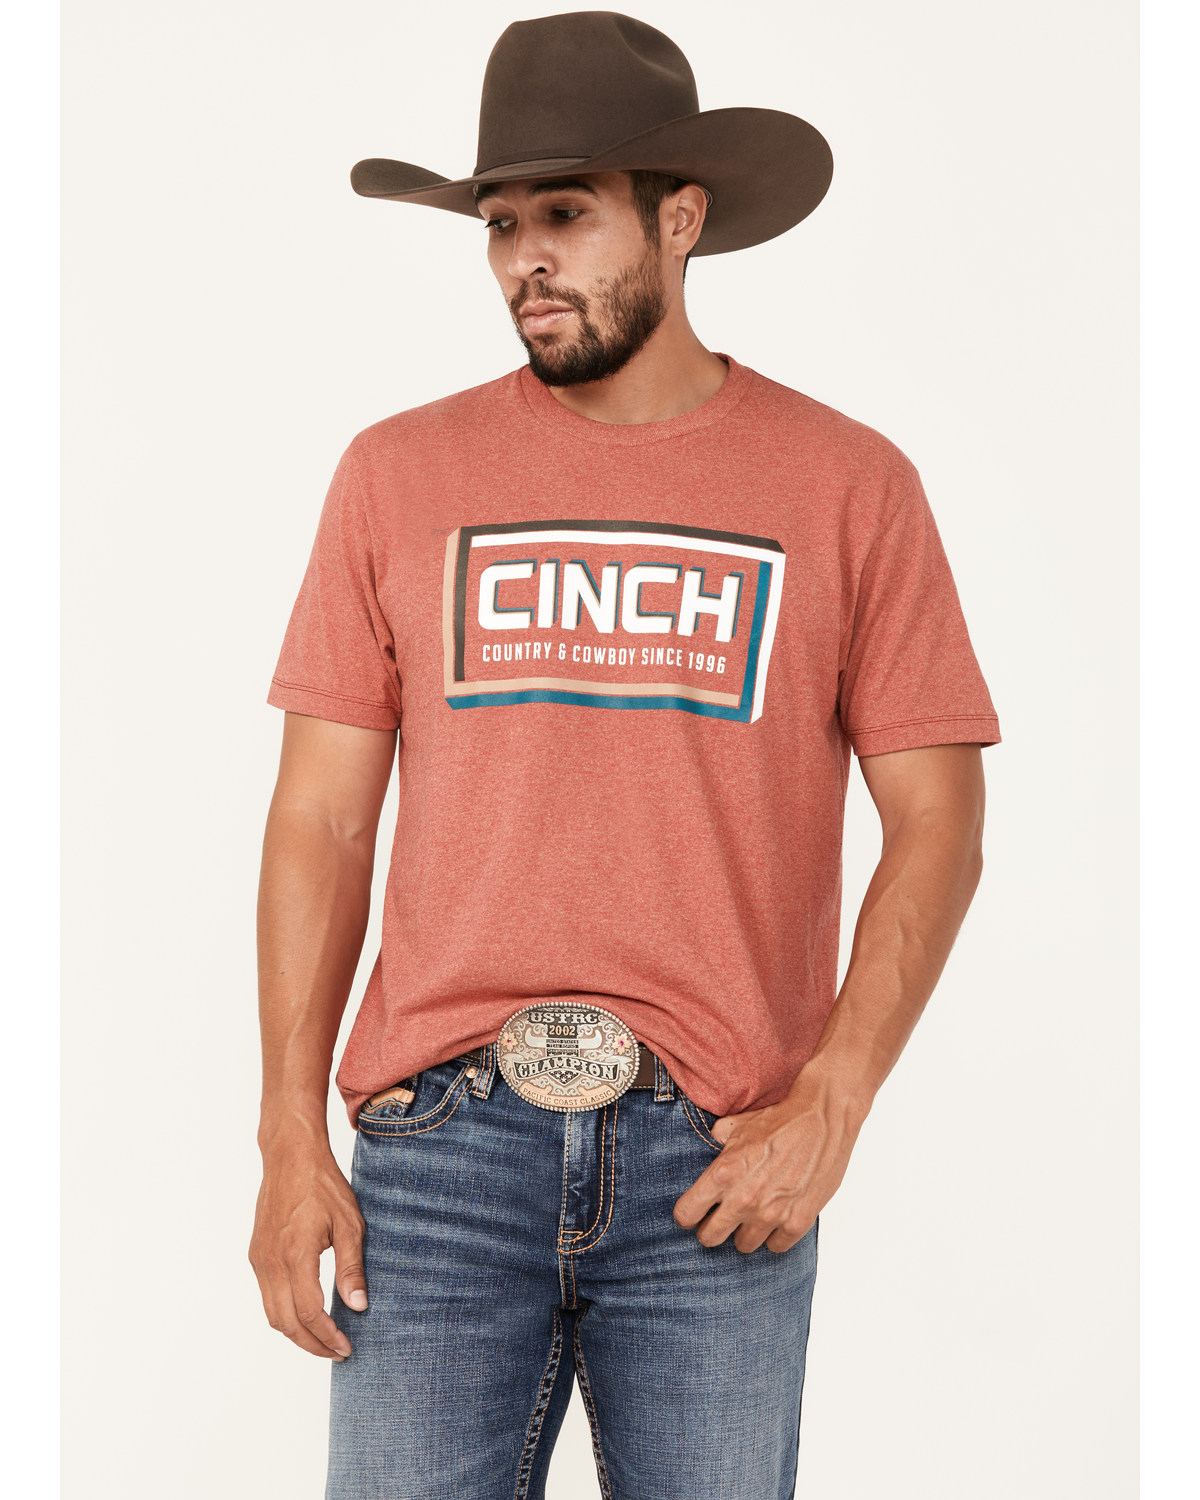 Cinch Men's Country & Cowboy Logo Short Sleeve Graphic T-Shirt